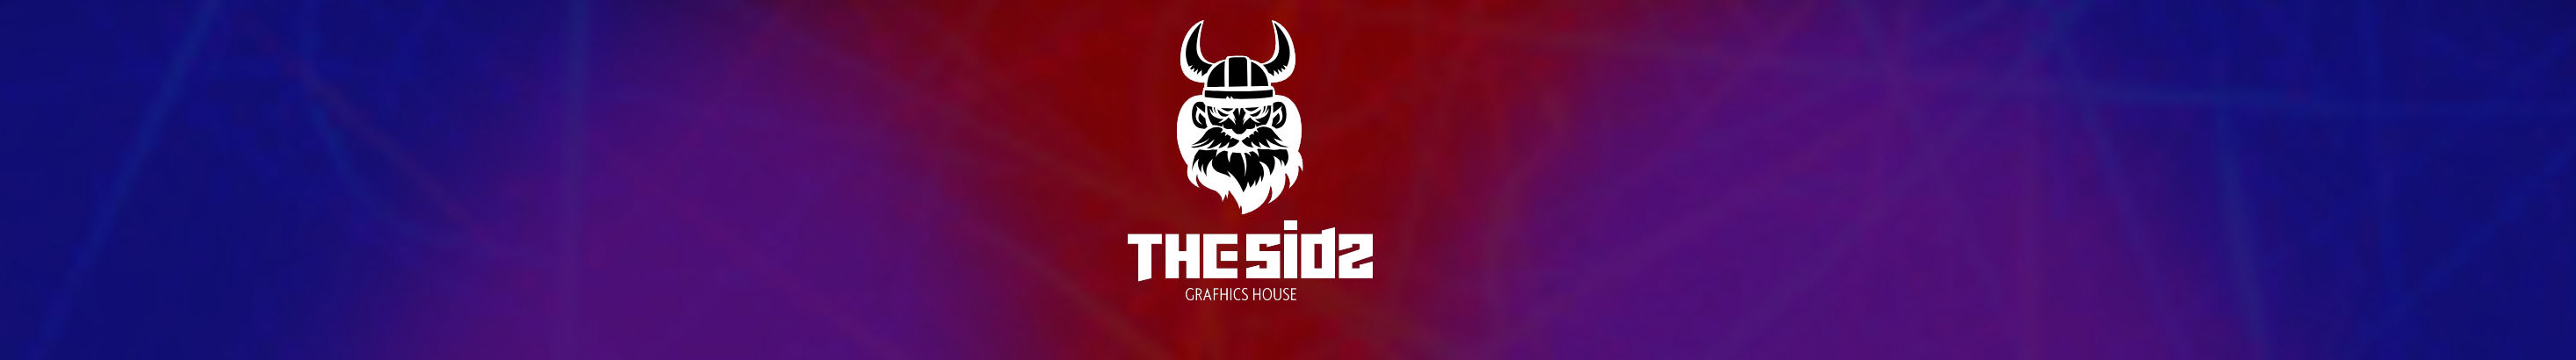 The Sidz Graphics's profile banner